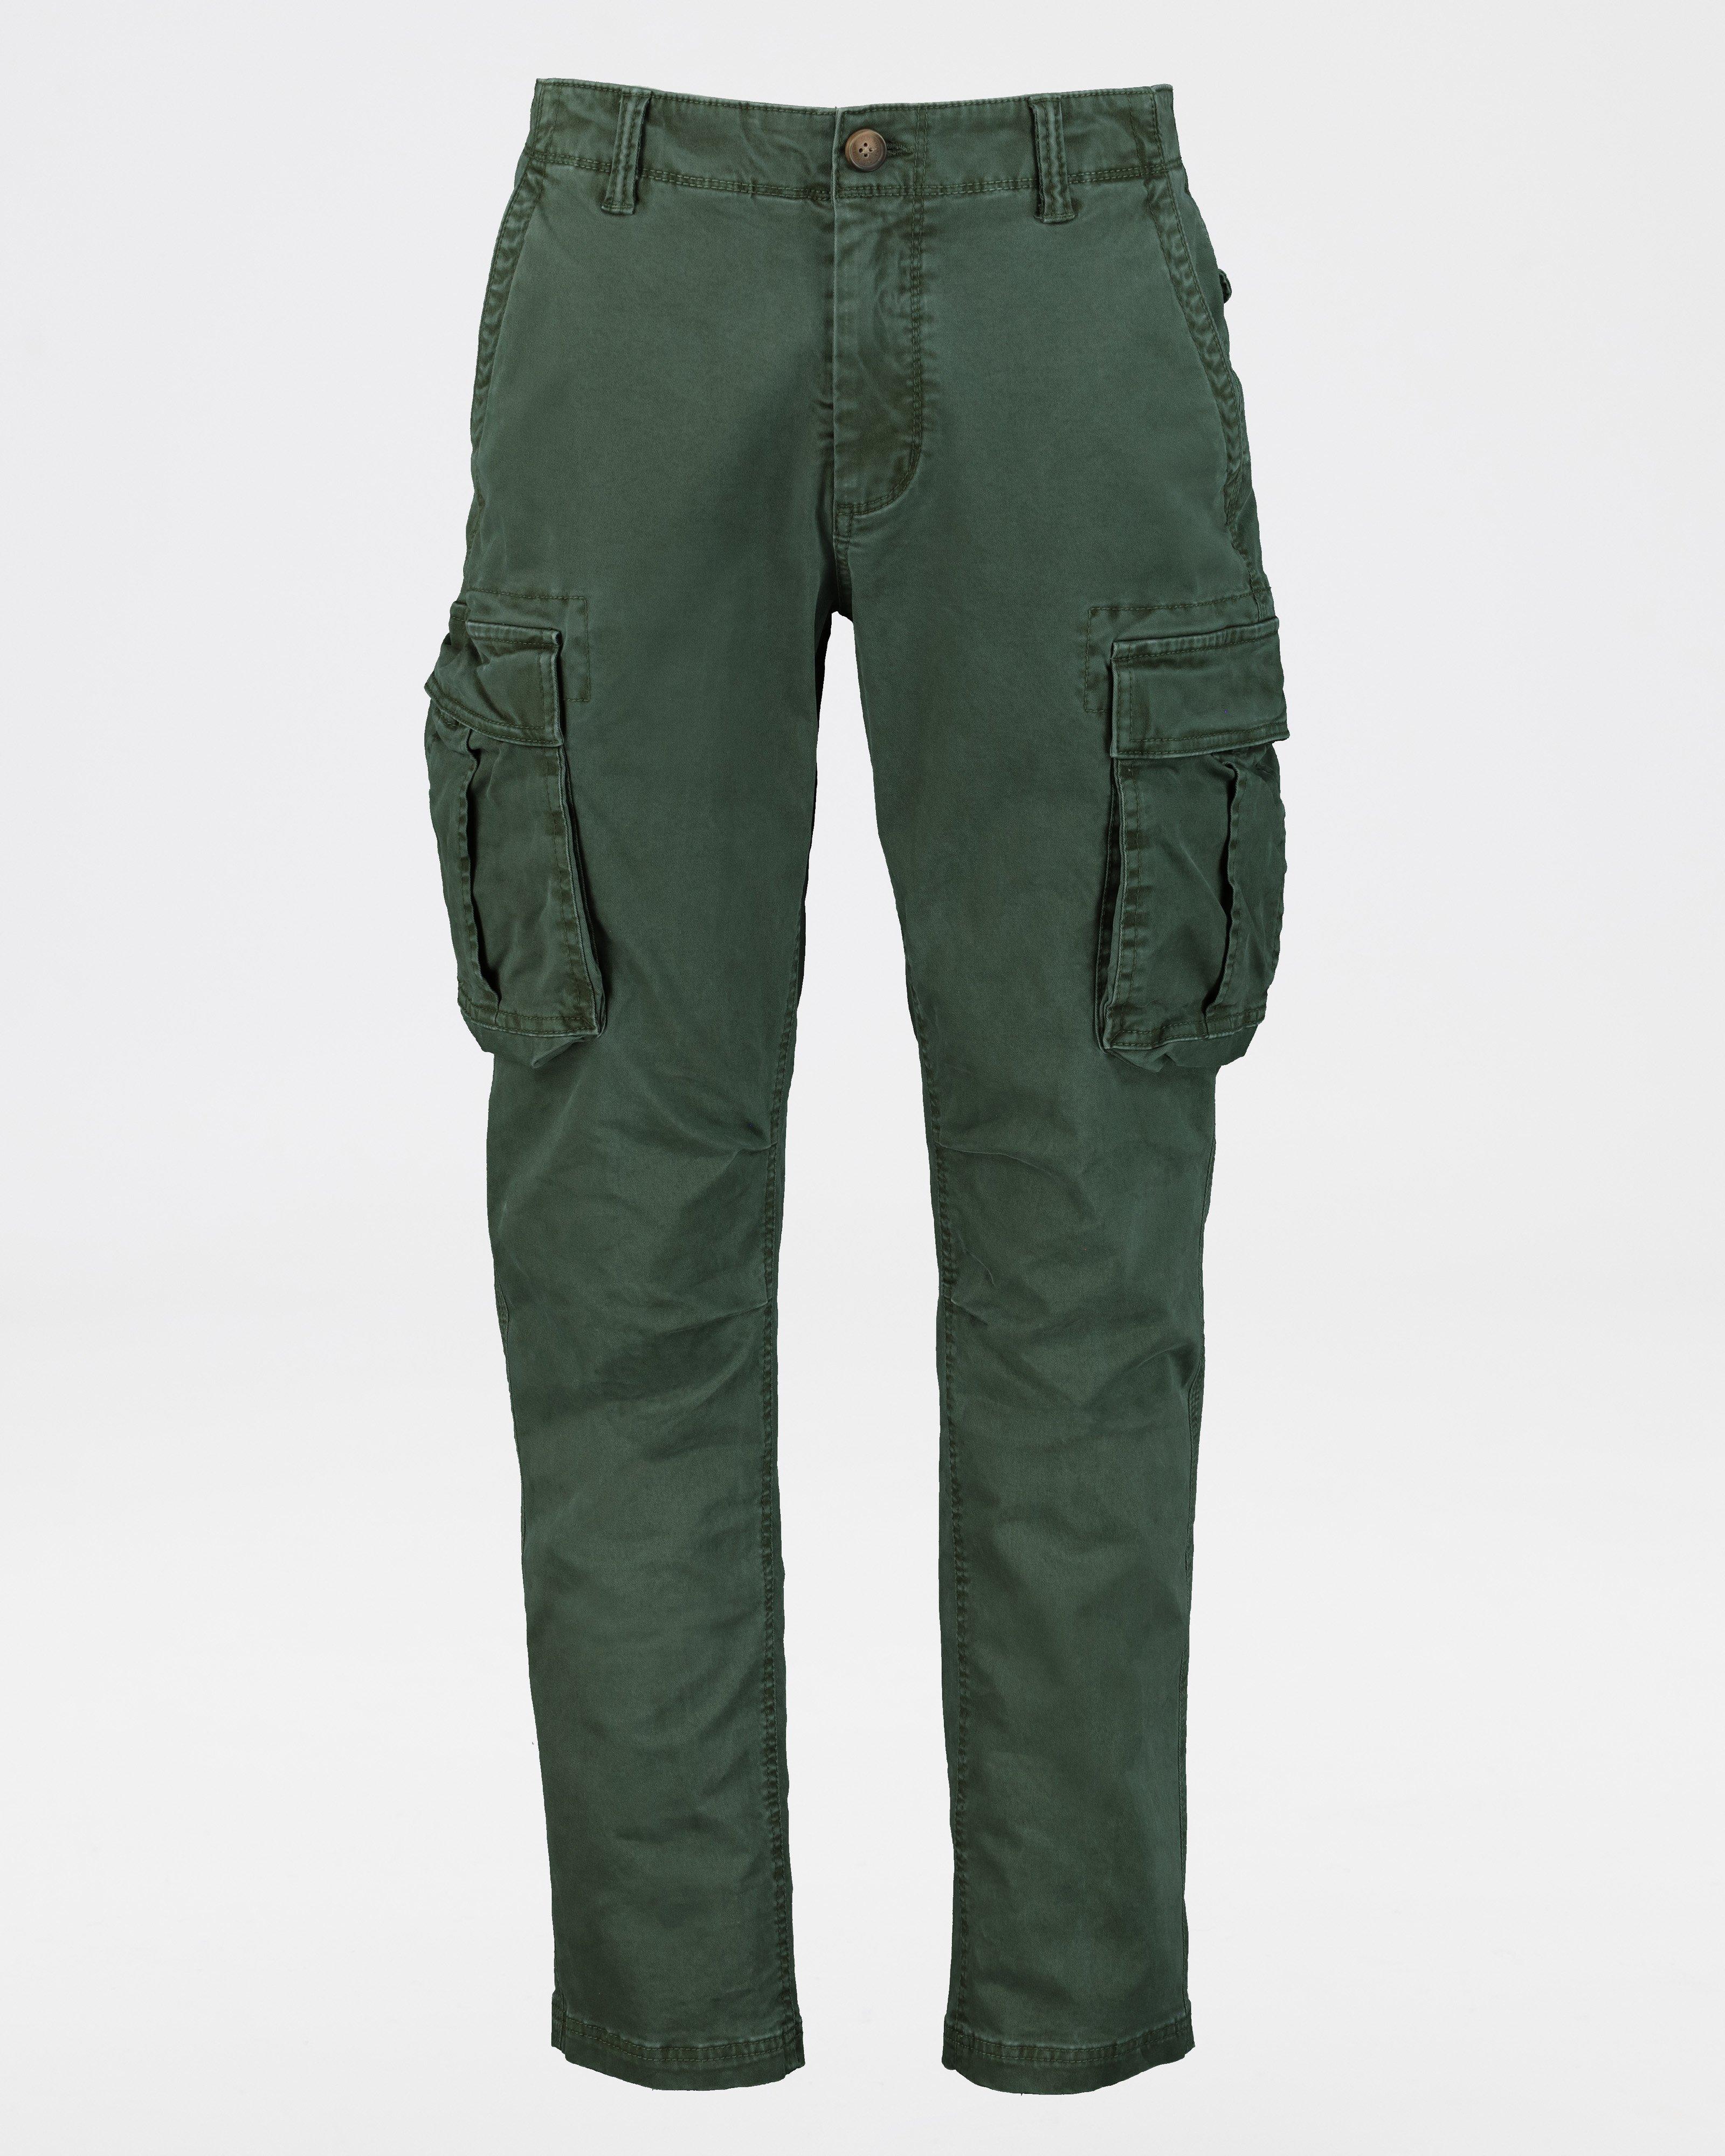 Y-3 Khaki Classic Utility Cargo Pants in Green for Men